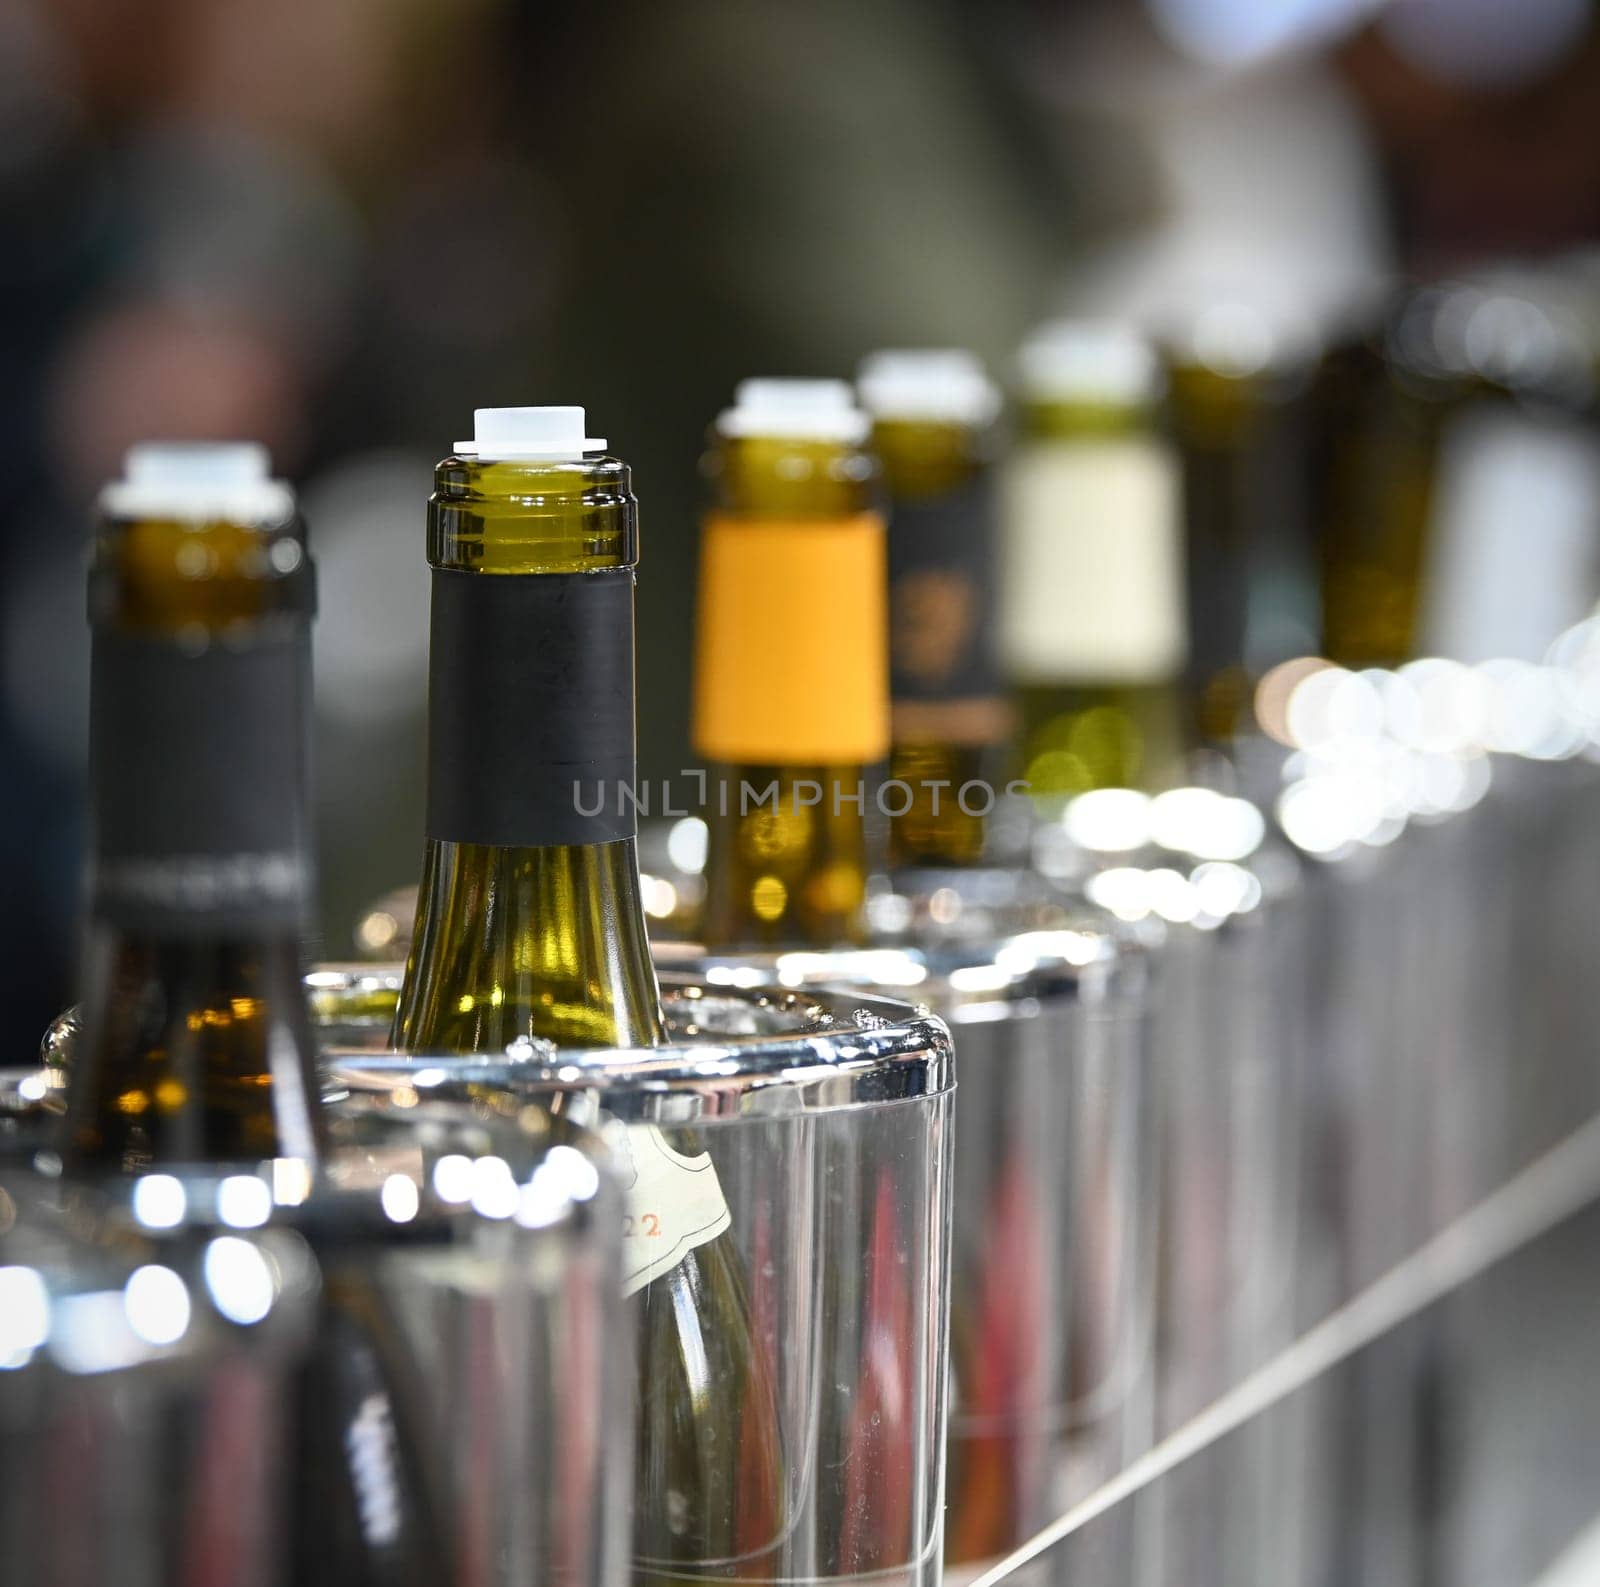 Tasting wine, Row of vintage wine bottles in a wine cellar by FreeProd